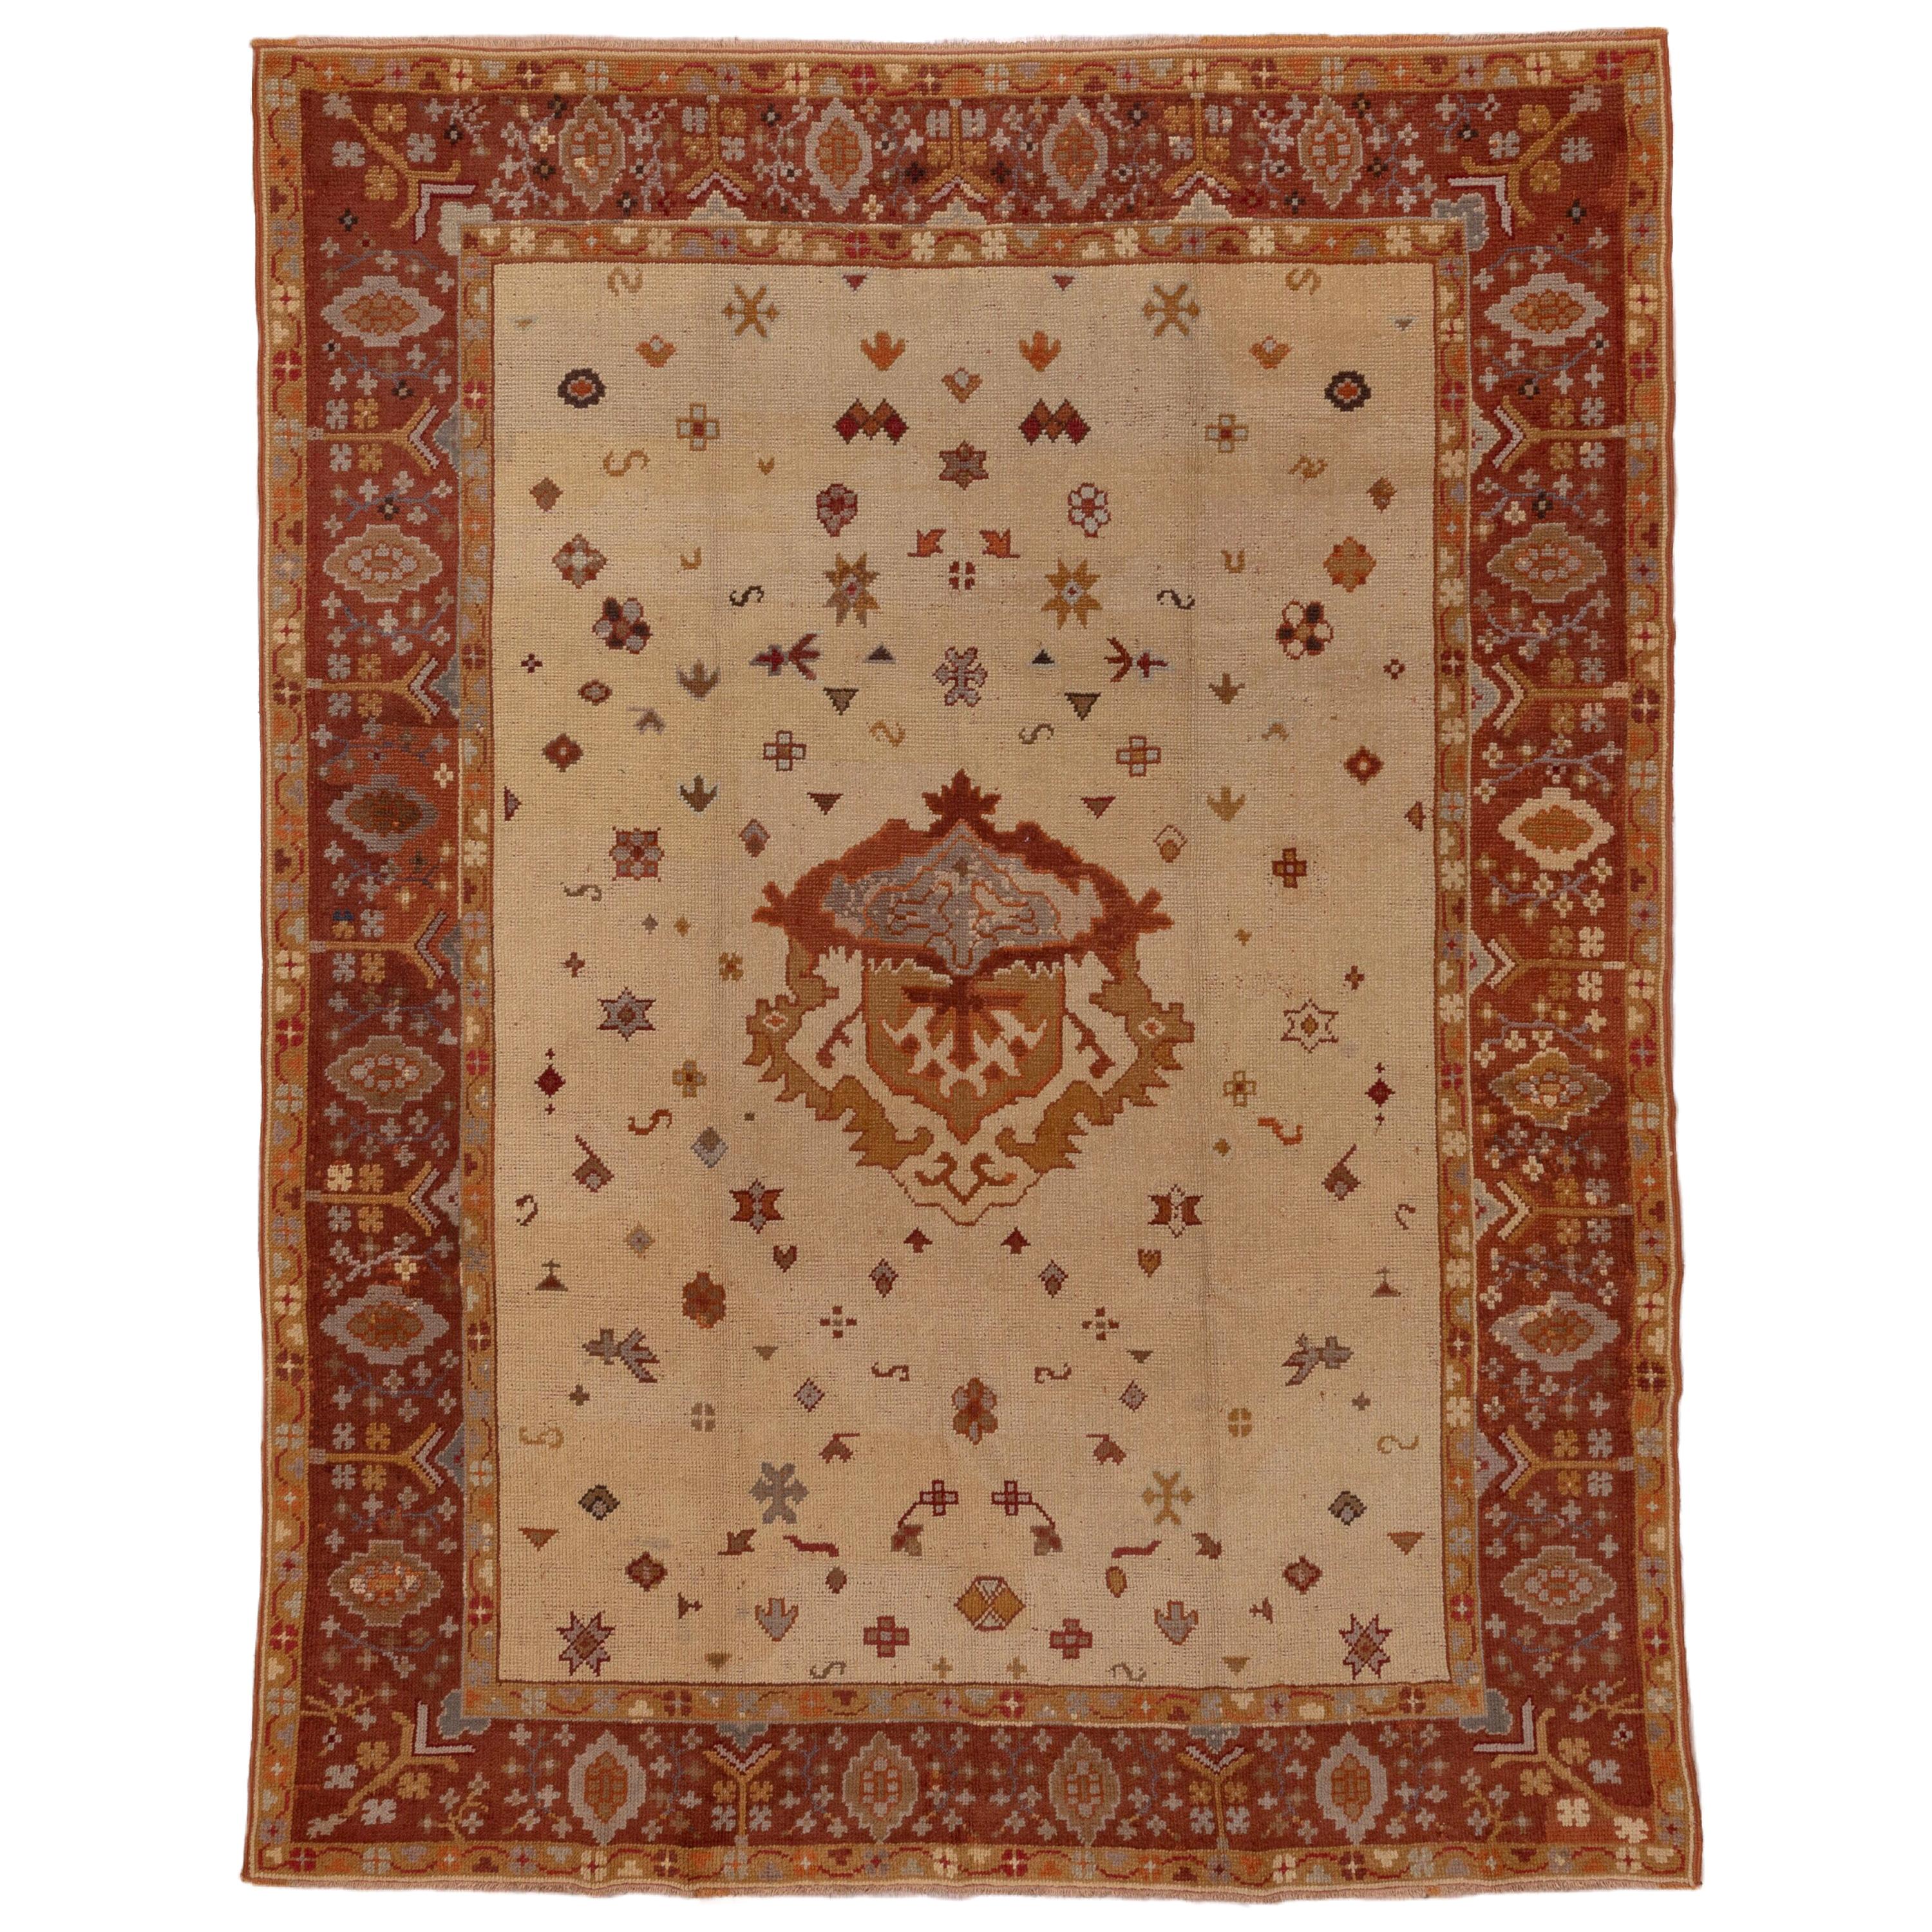 Antique Decorative Oushak Carpet, circa 1910s